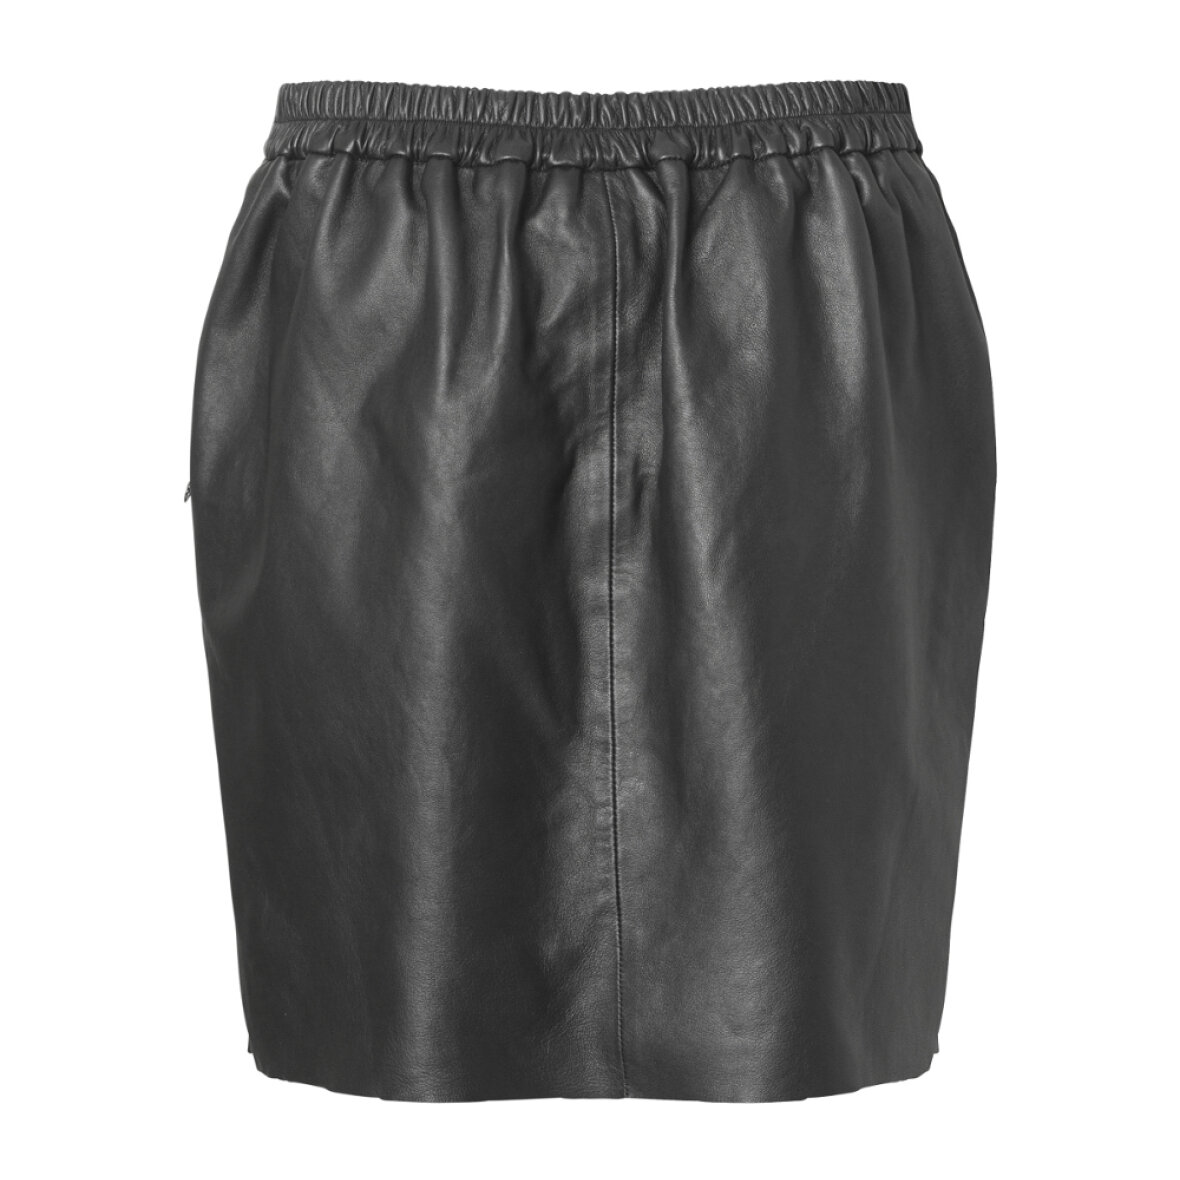 lav lektier cement Fern Fine Cph Plus Fine Alexa Skind nederdel sort - Shop online nu